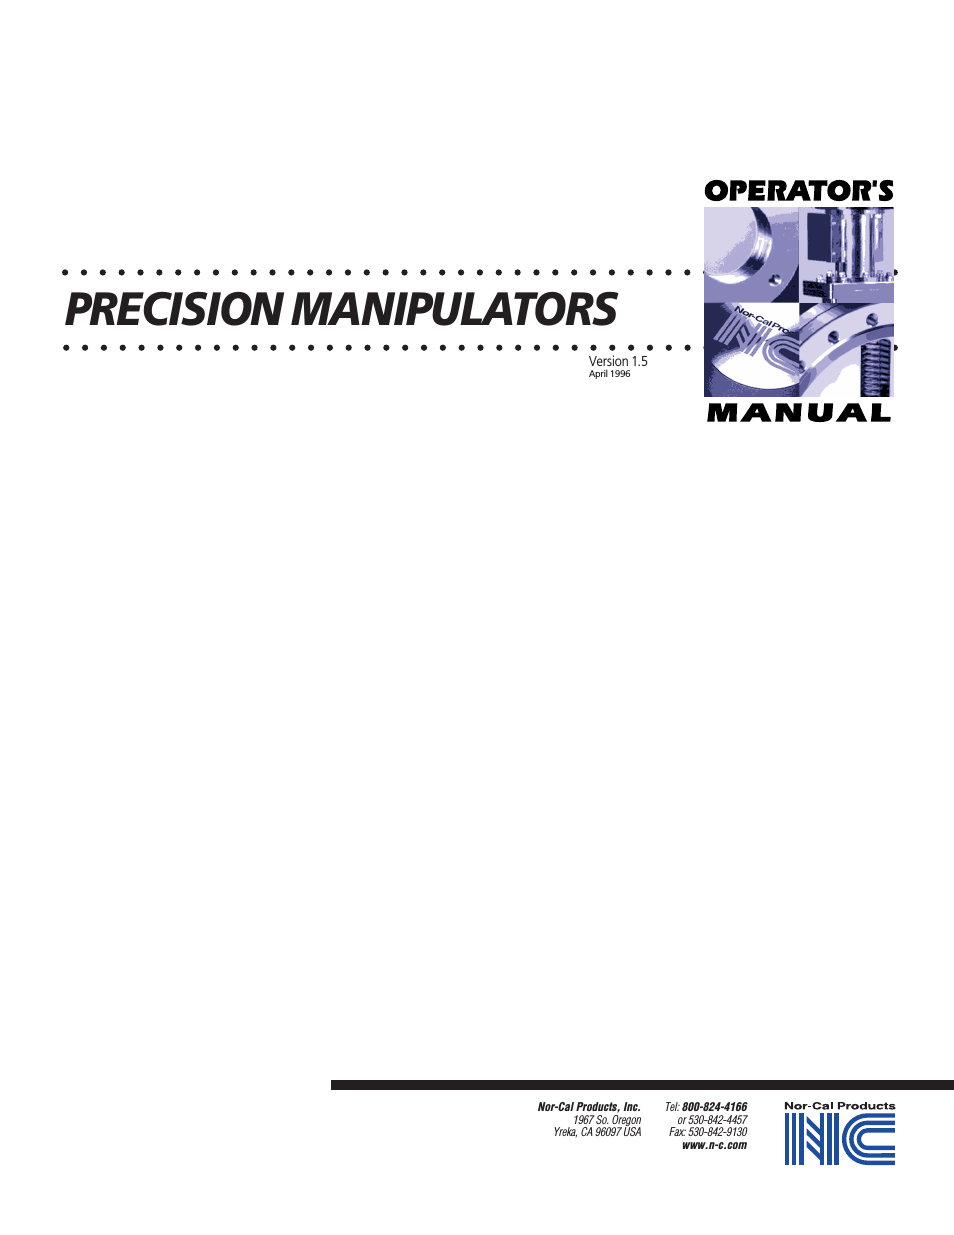 Precision Manipulators Version 1.5